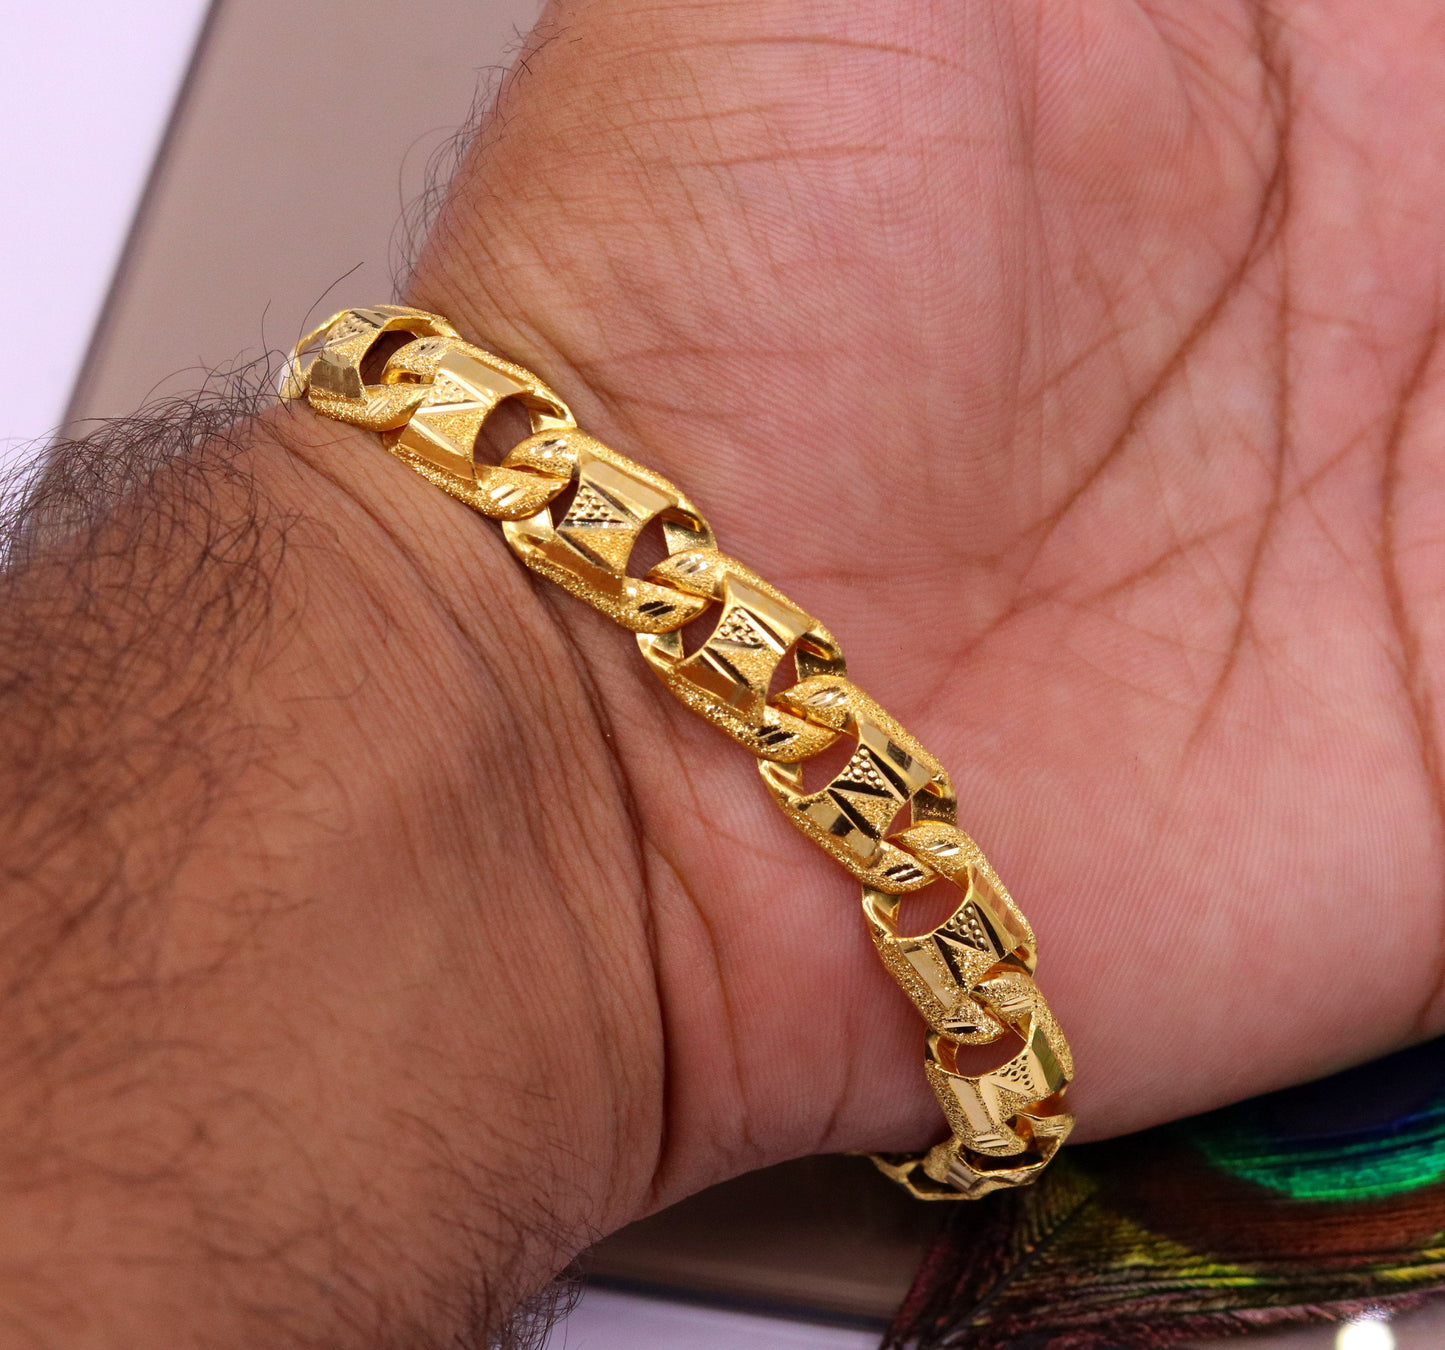 Amazing 22kt yellow gold handcrafted gorgeous design diamond cut designer flexible bracelet unique new stylish unisex bracelet jewelry - TRIBAL ORNAMENTS